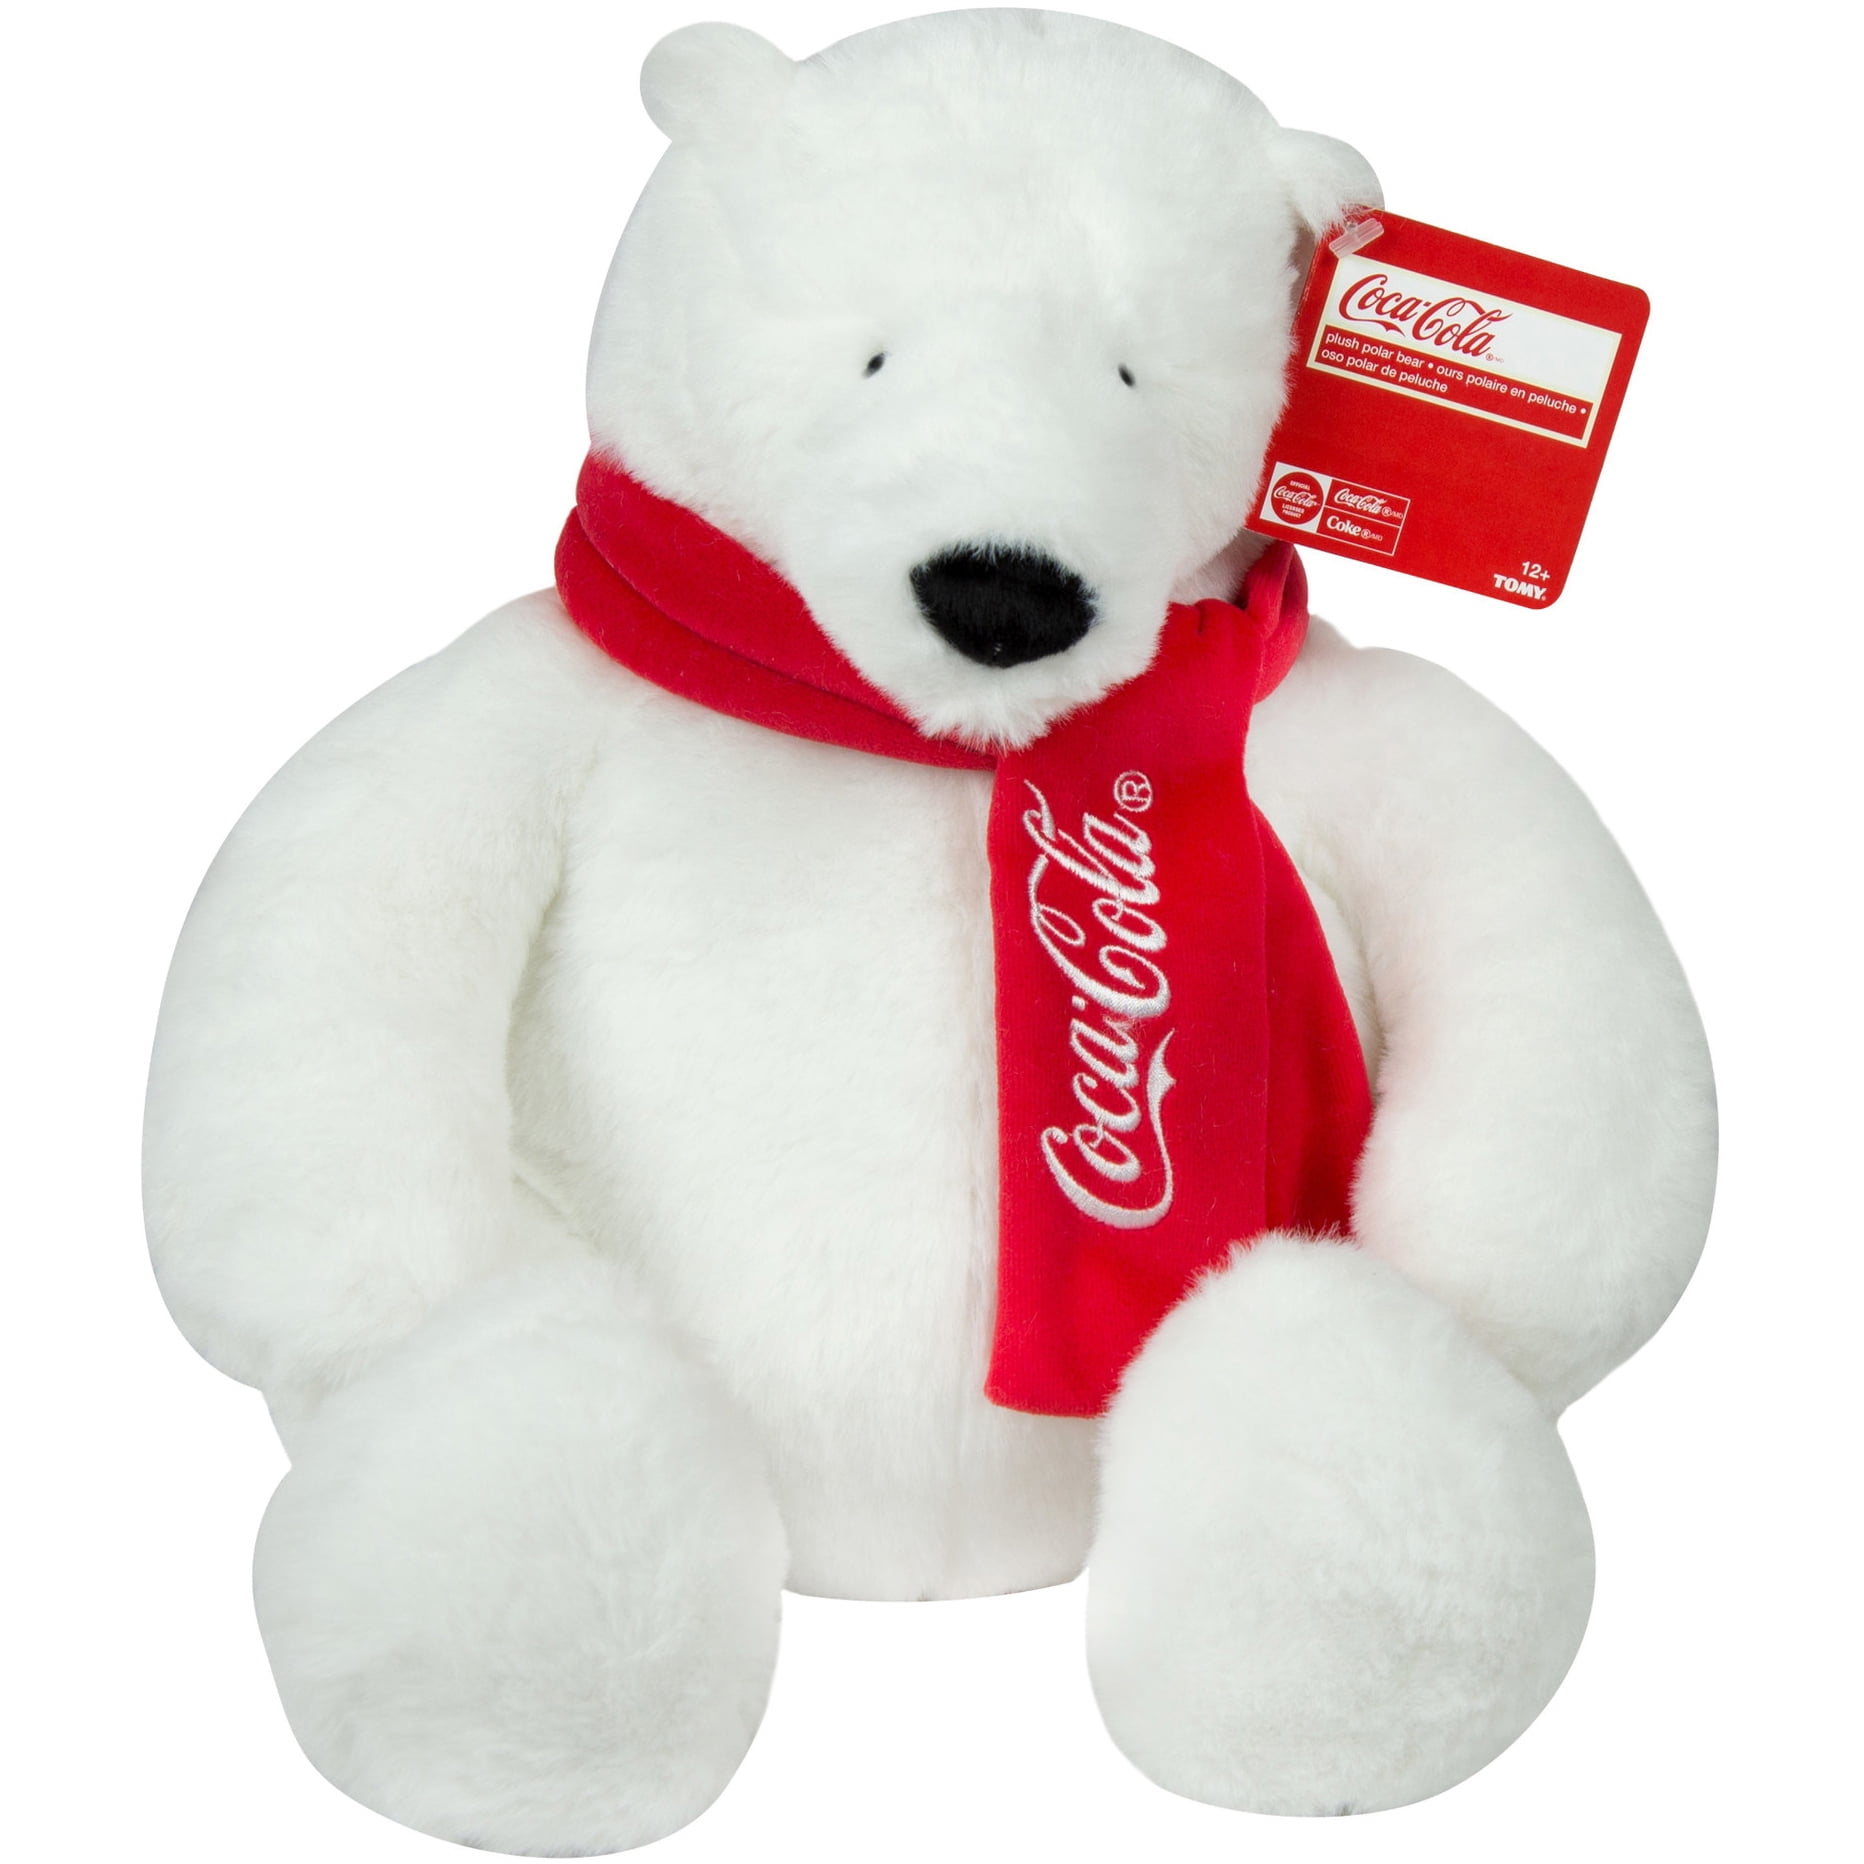 Coca Cola Arctic Home Polar Bear W/Scarf Plush 4" tall MIP great party favor 